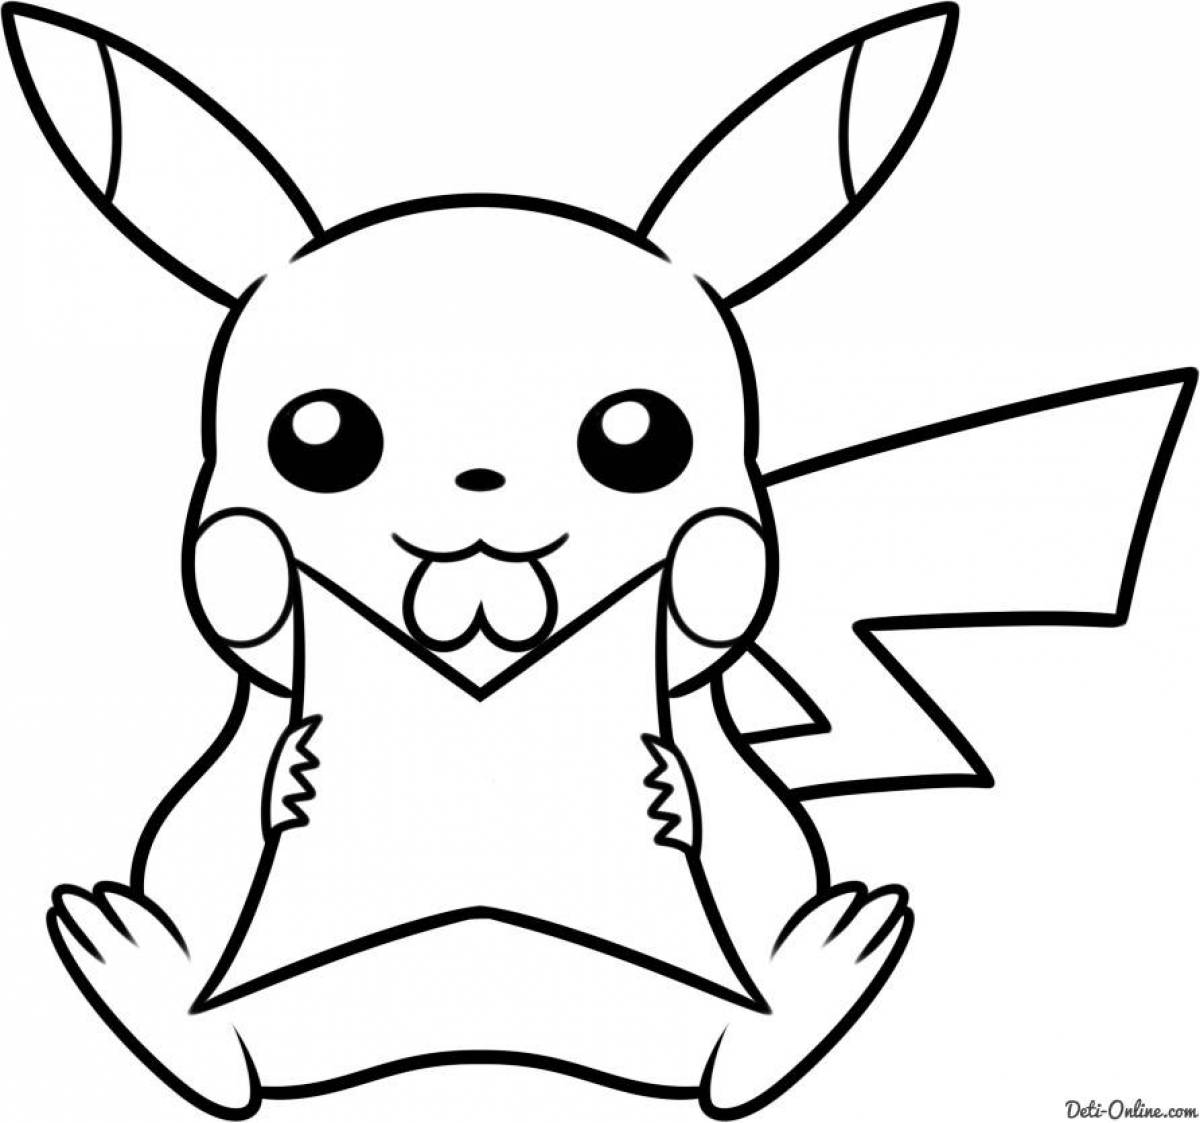 Happy pikachu coloring